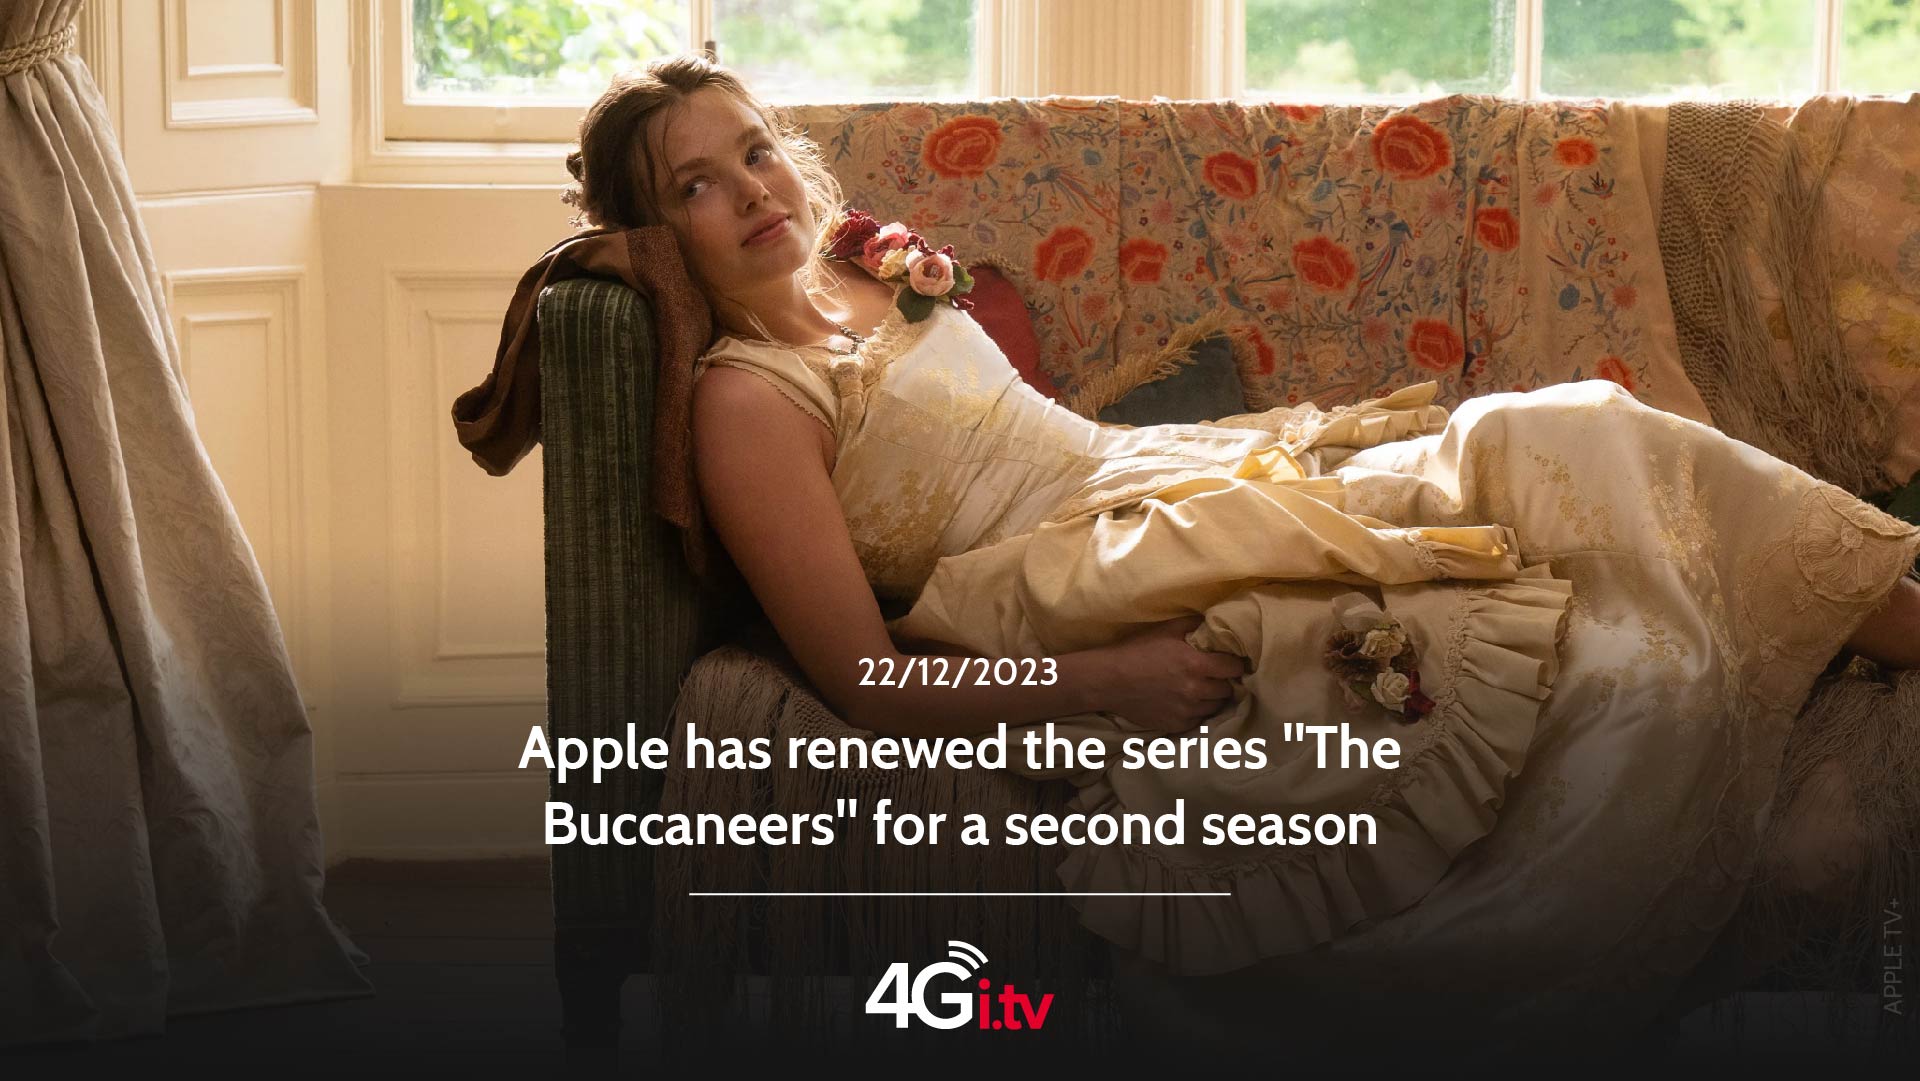 Lesen Sie mehr über den Artikel Apple has renewed the series “The Buccaneers” for a second season